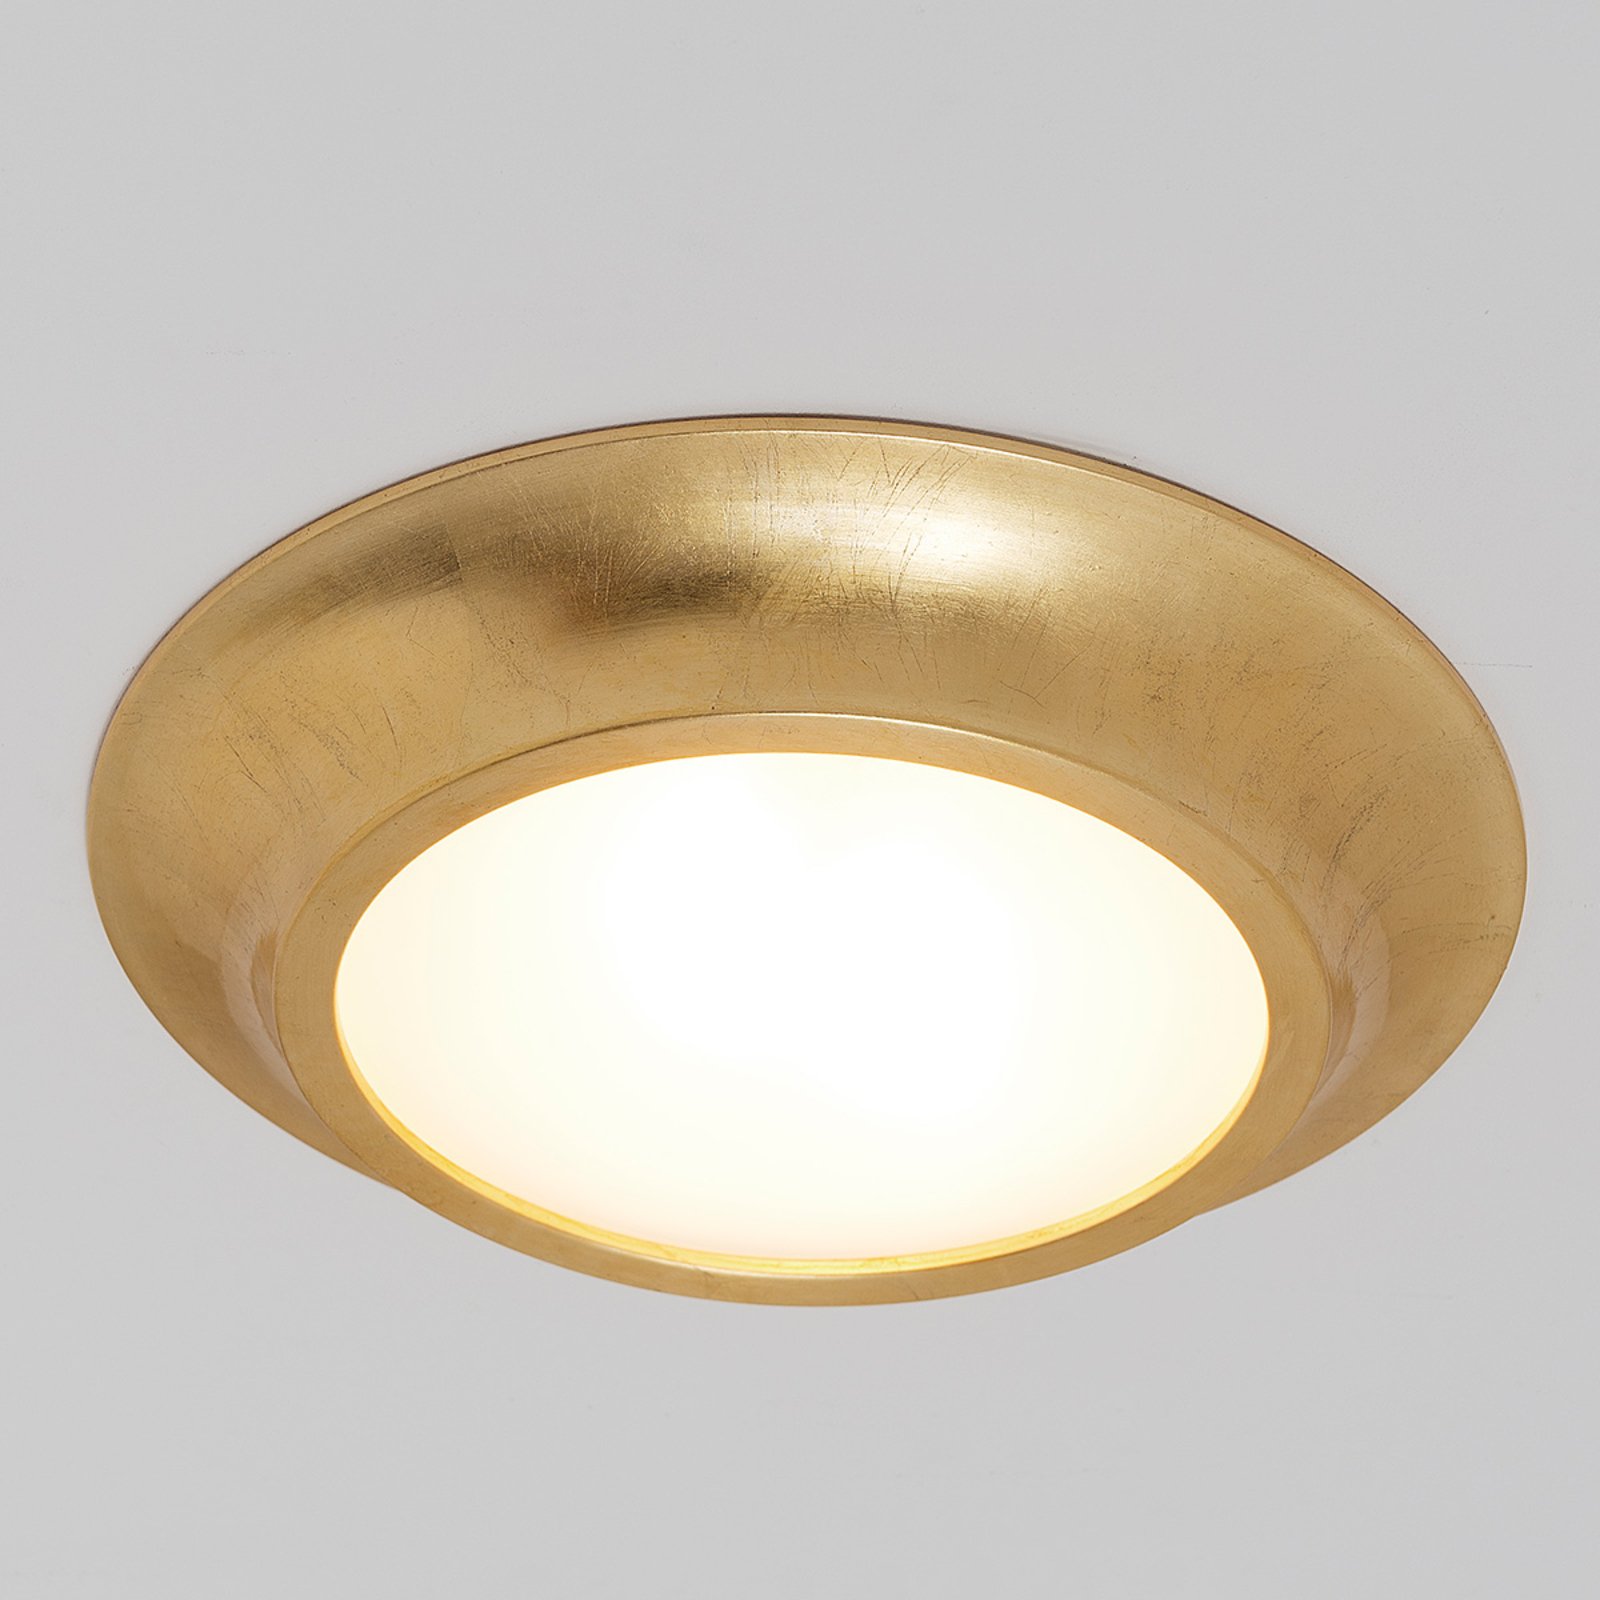 Golden ceramic ceiling light Spettacolo